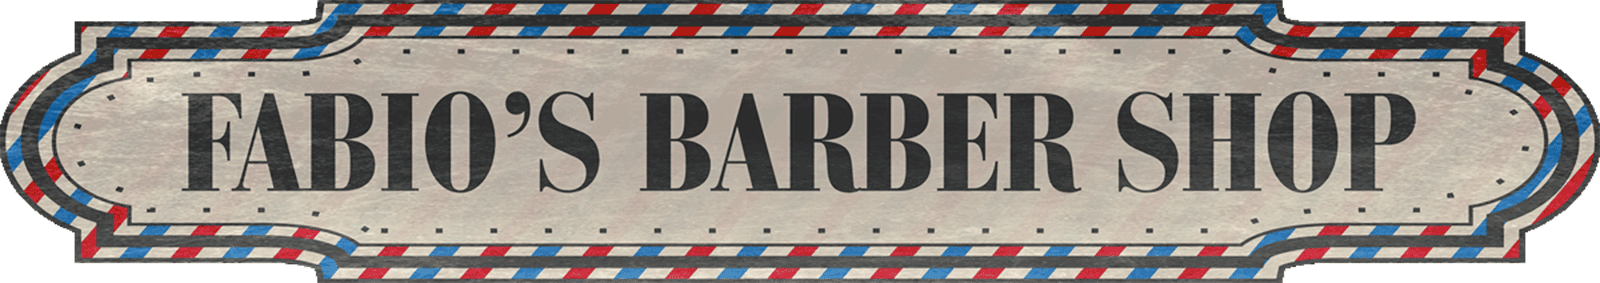 www.fabiosbarbershop.com